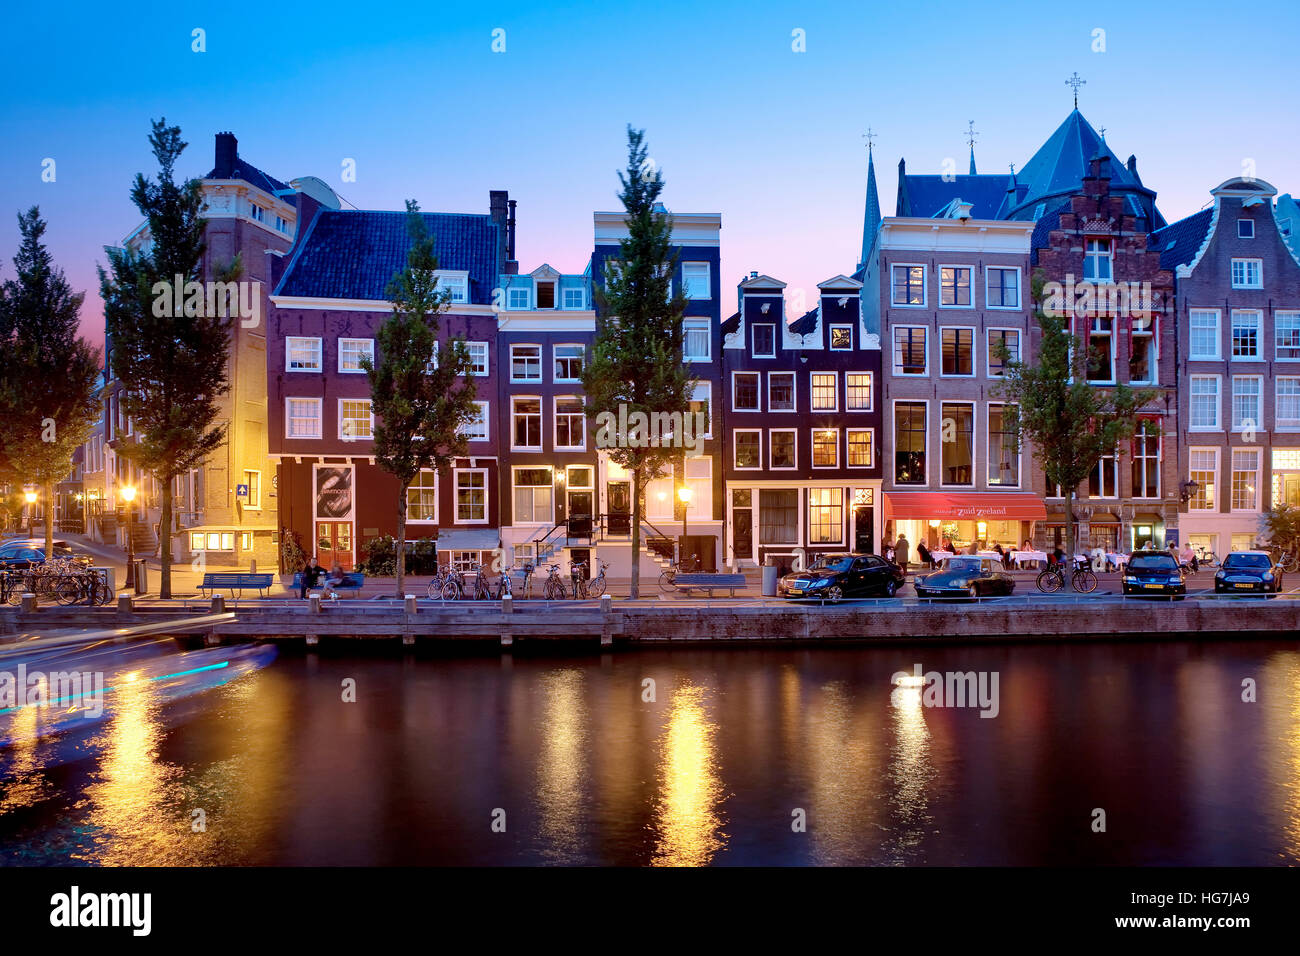 Singel canal at night, Amsterdam Stock Photo